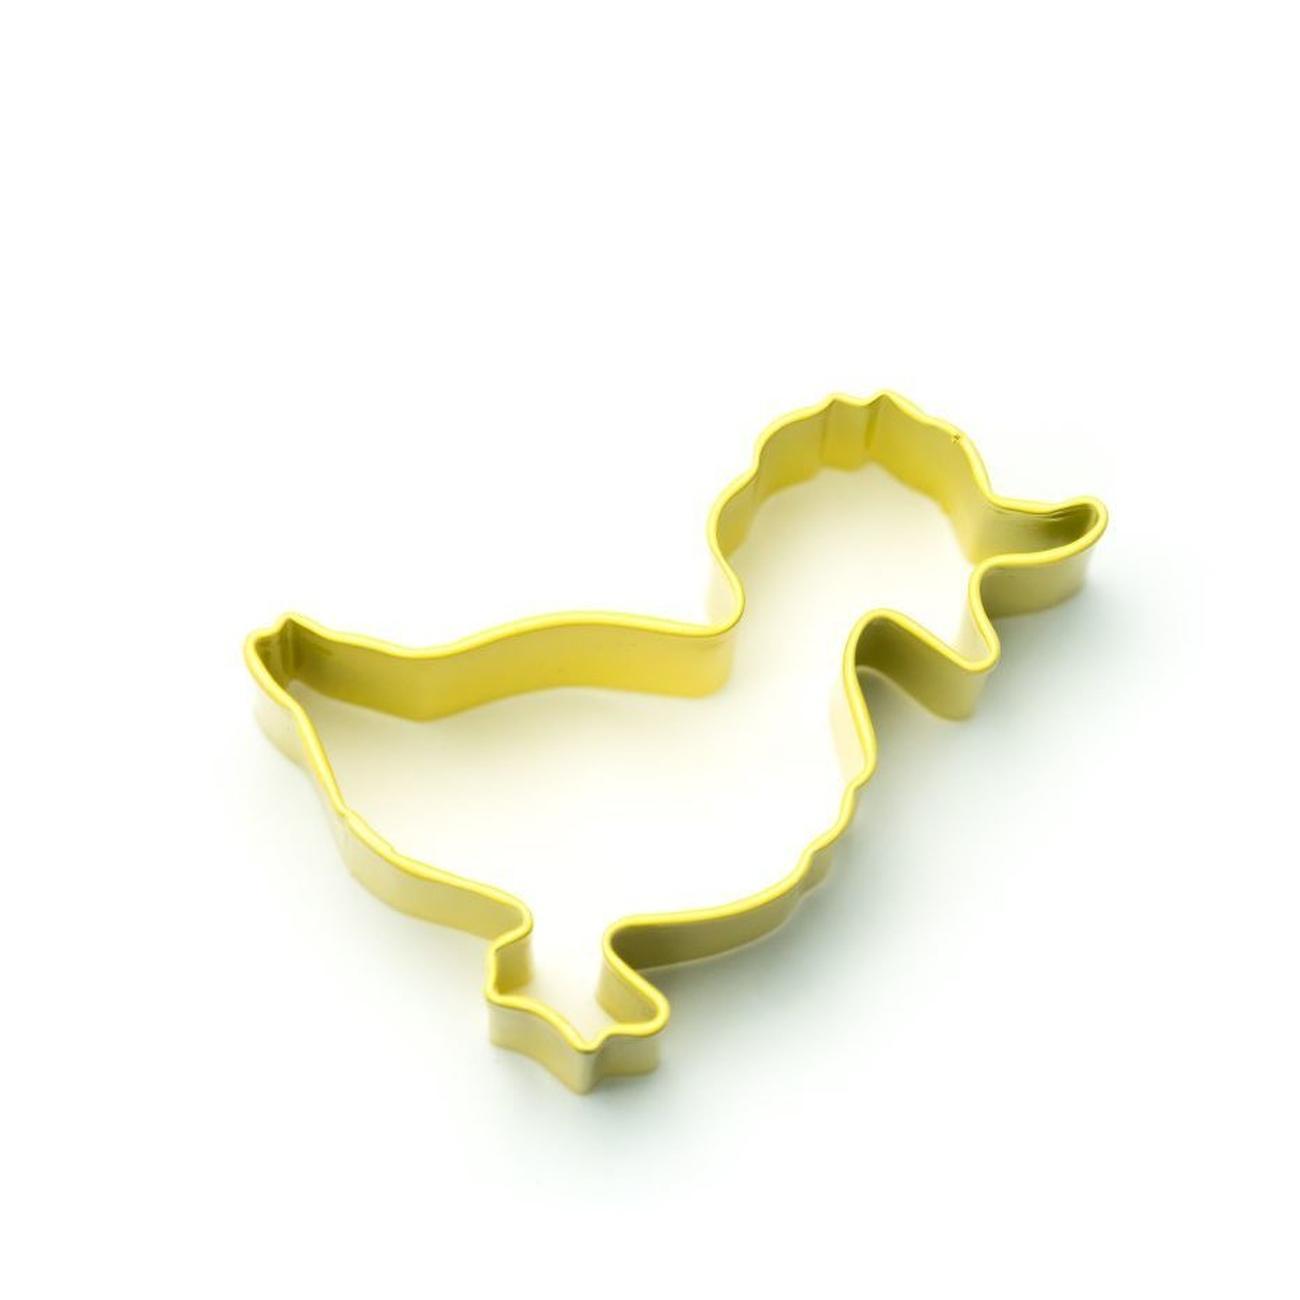 edd-yellow-duck-cookie-cutter - Eddingtons Yellow Duck Cookie Cutter